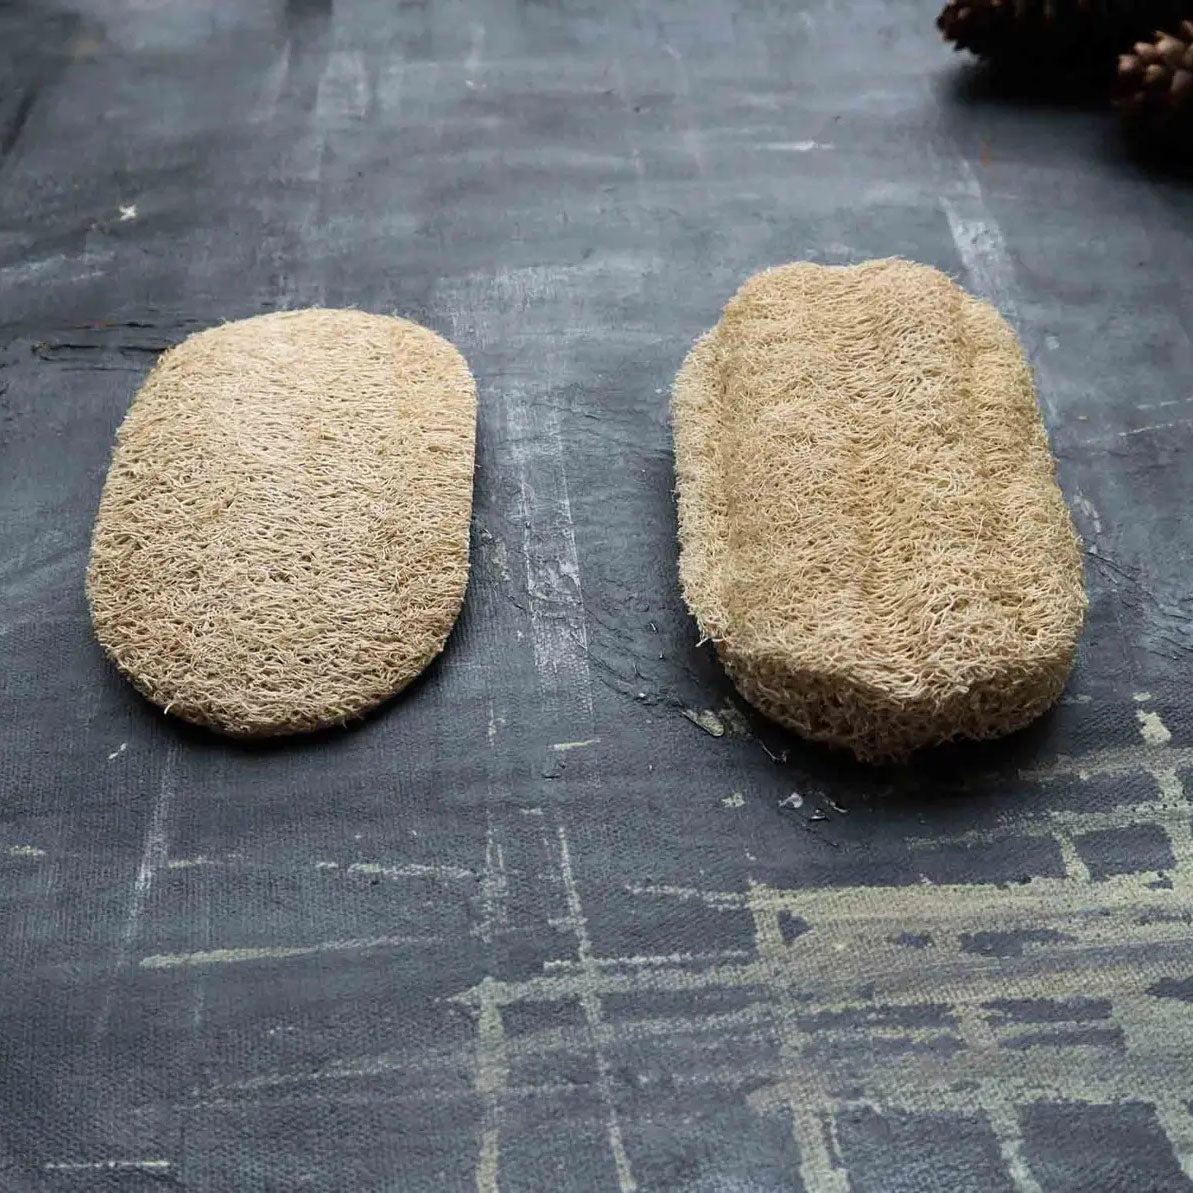 pumice stone and exfoliating loofah sponge